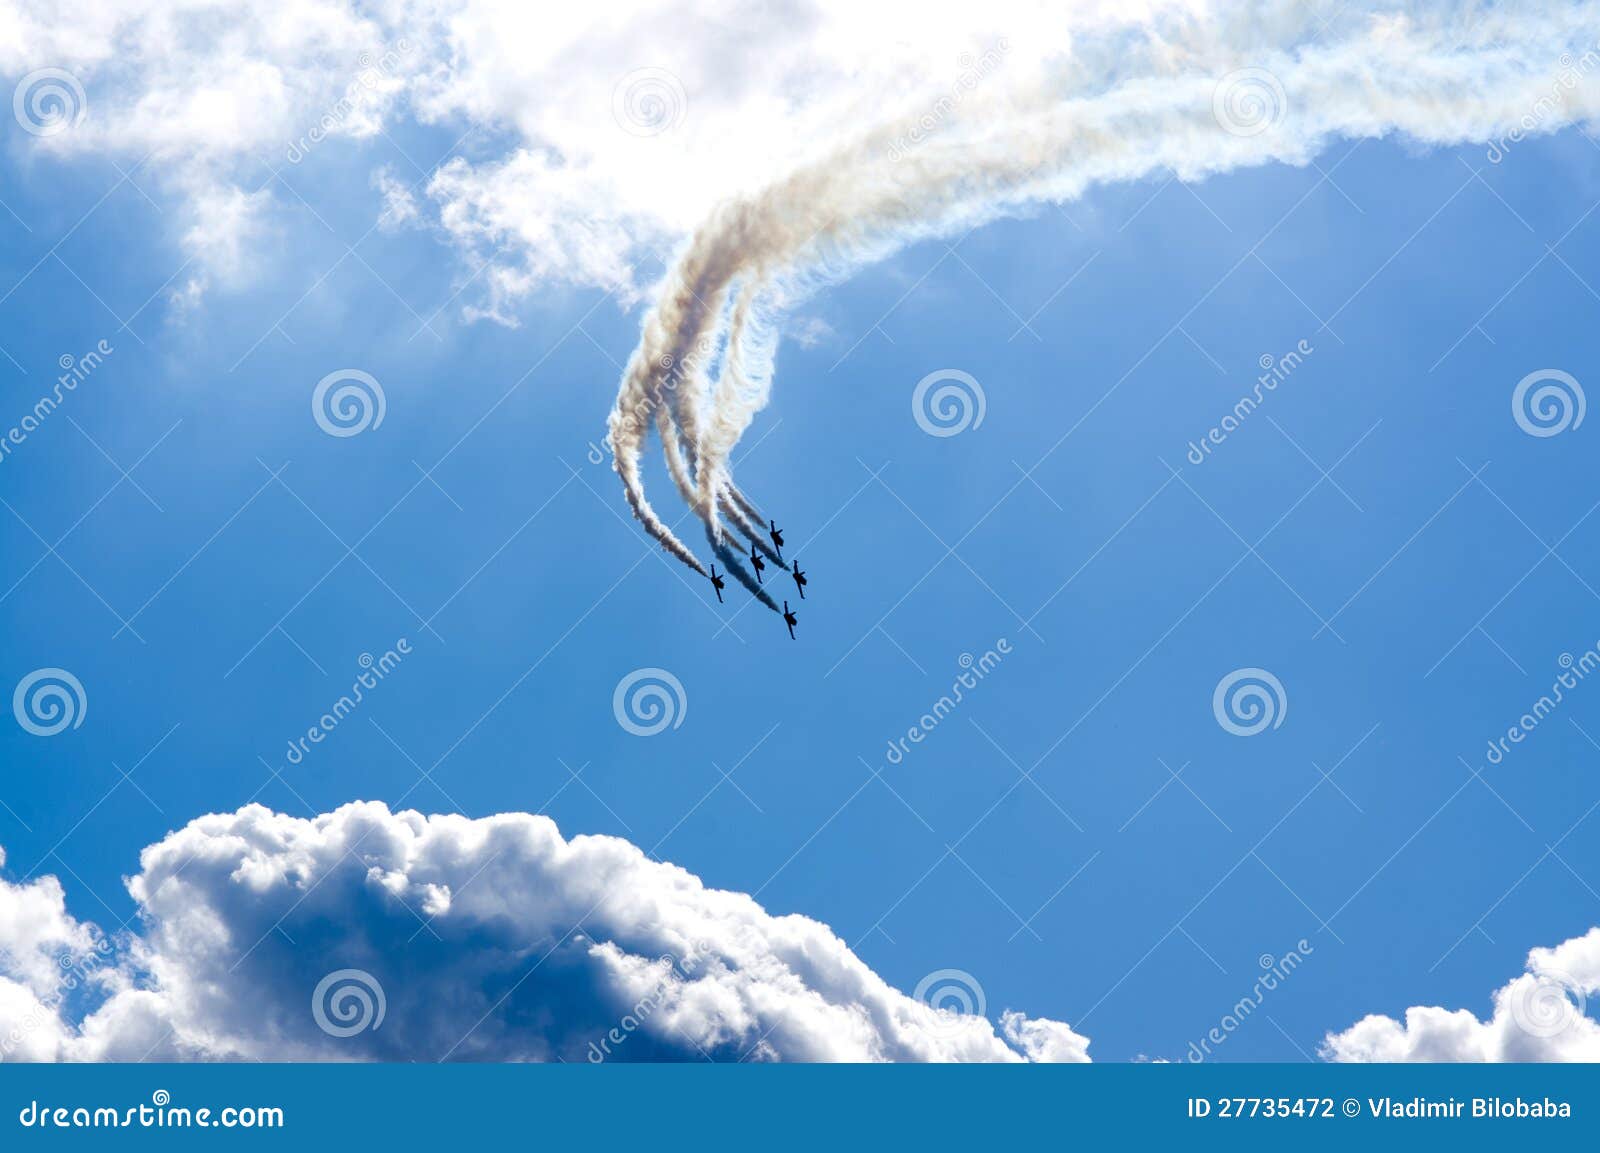 aerobatics